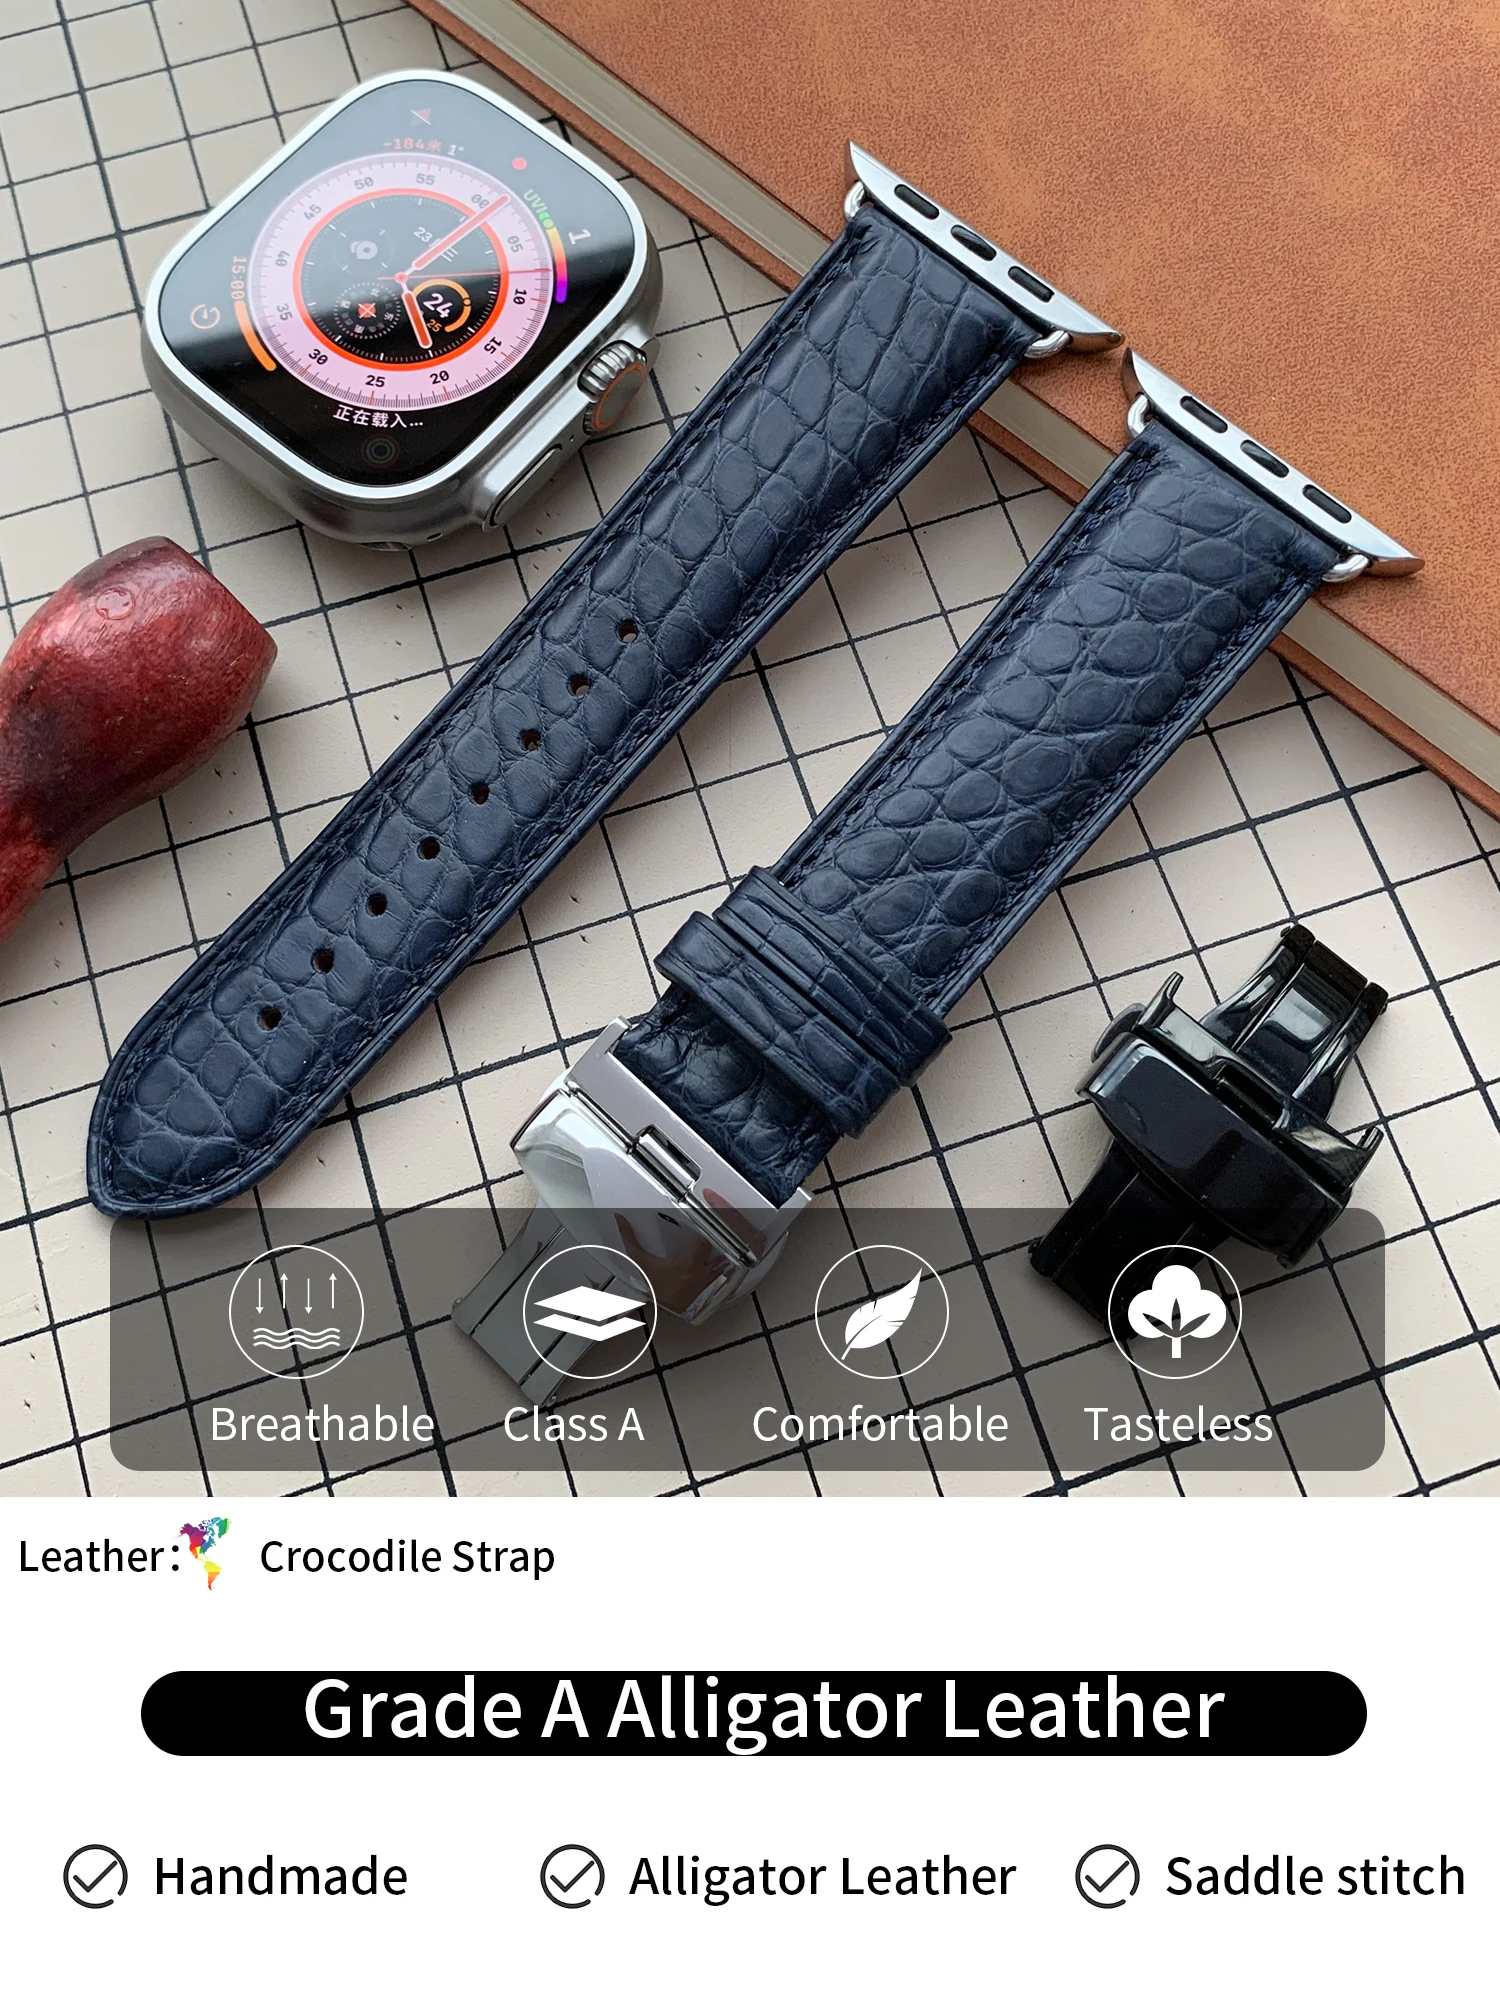 Apple Watch | Black Alligator Grain Leather